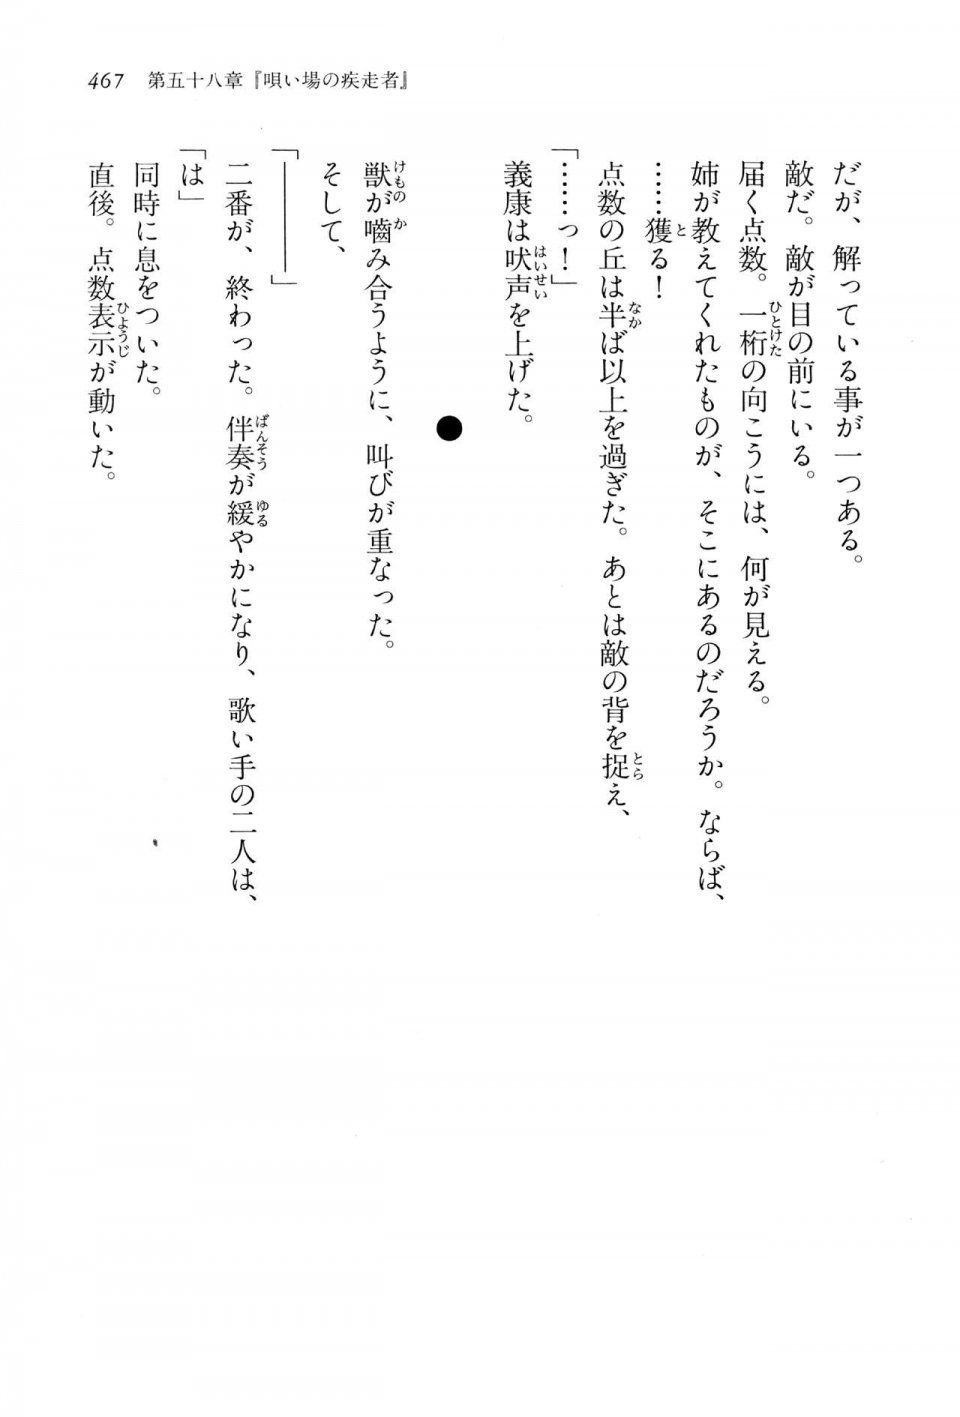 Kyoukai Senjou no Horizon LN Vol 15(6C) Part 1 - Photo #467